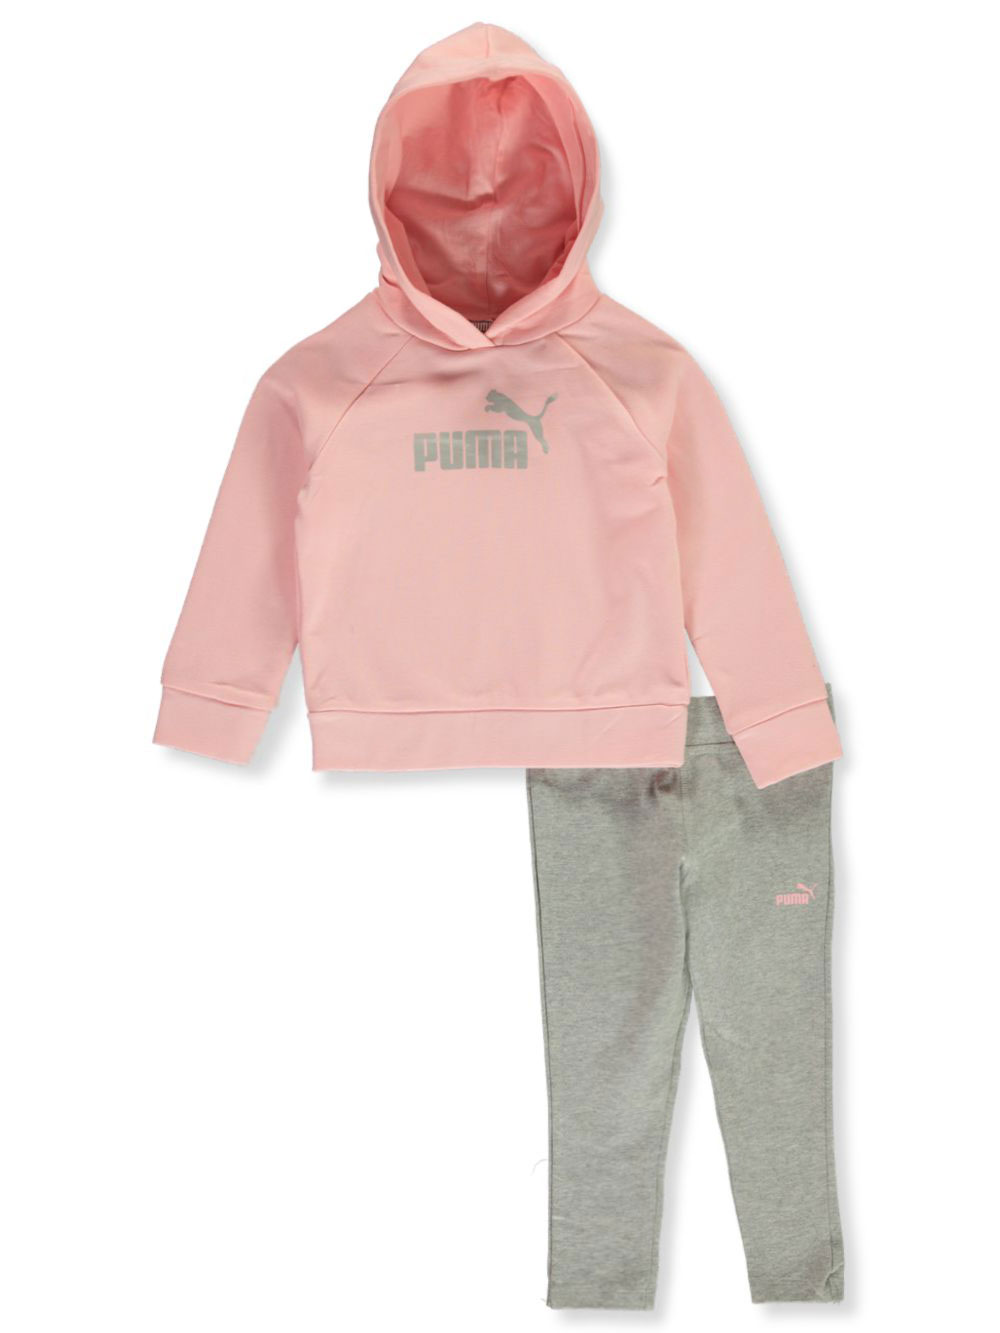 puma sweatsuit for girls